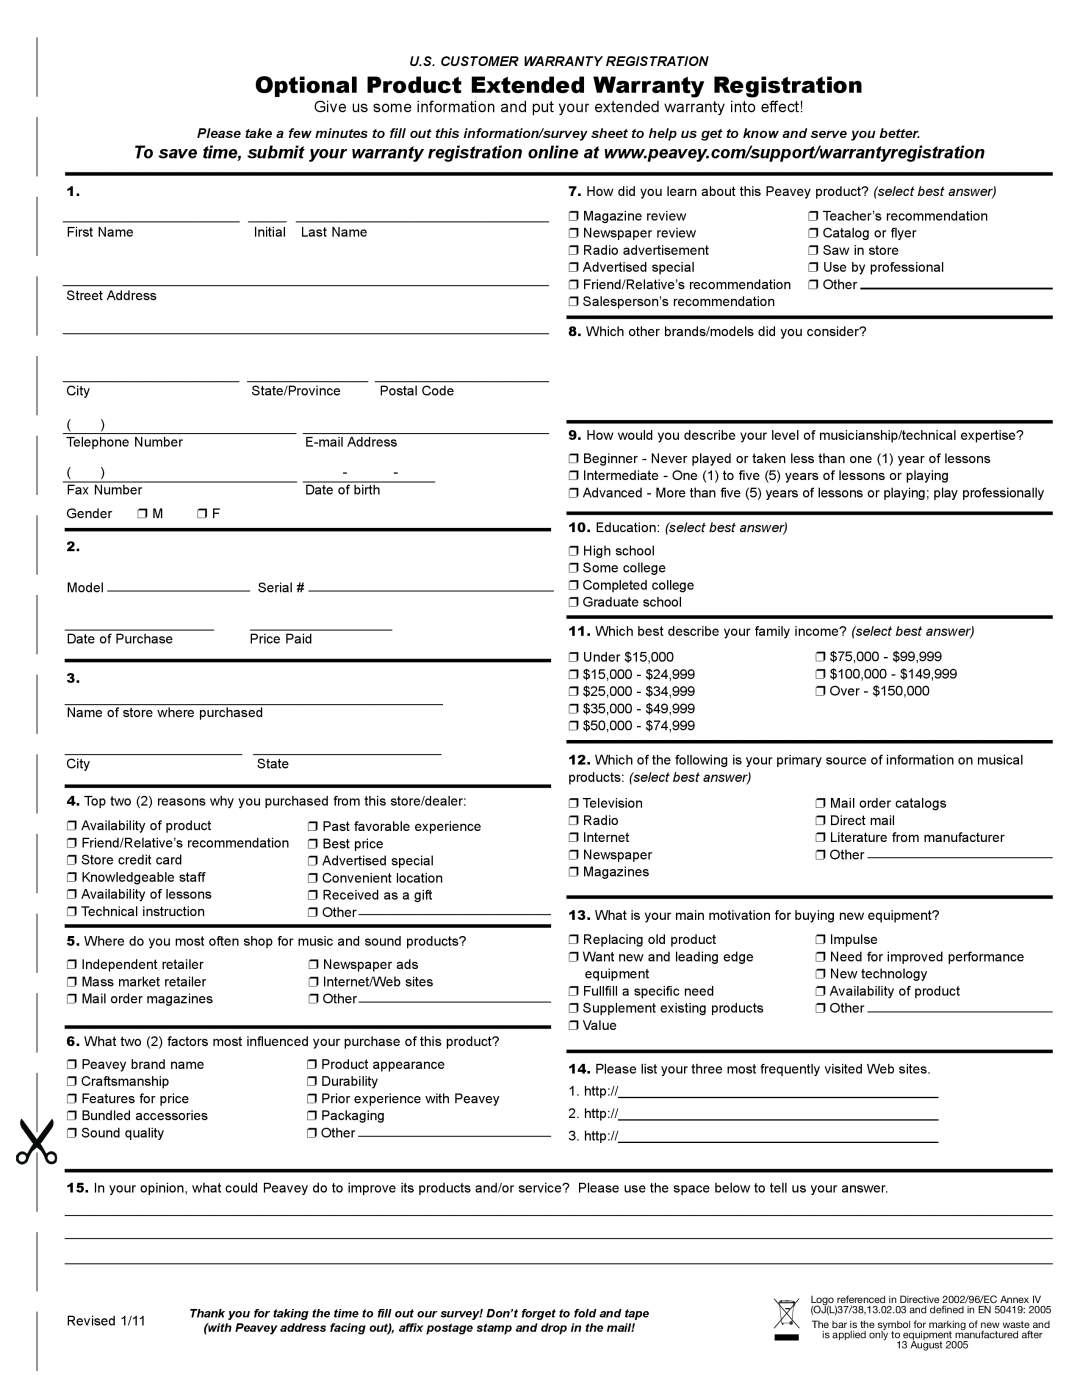 Peavey 35XO manual Optional Product Extended Warranty Registration, U.S. Customer Warranty Registration, Revised 1/11 